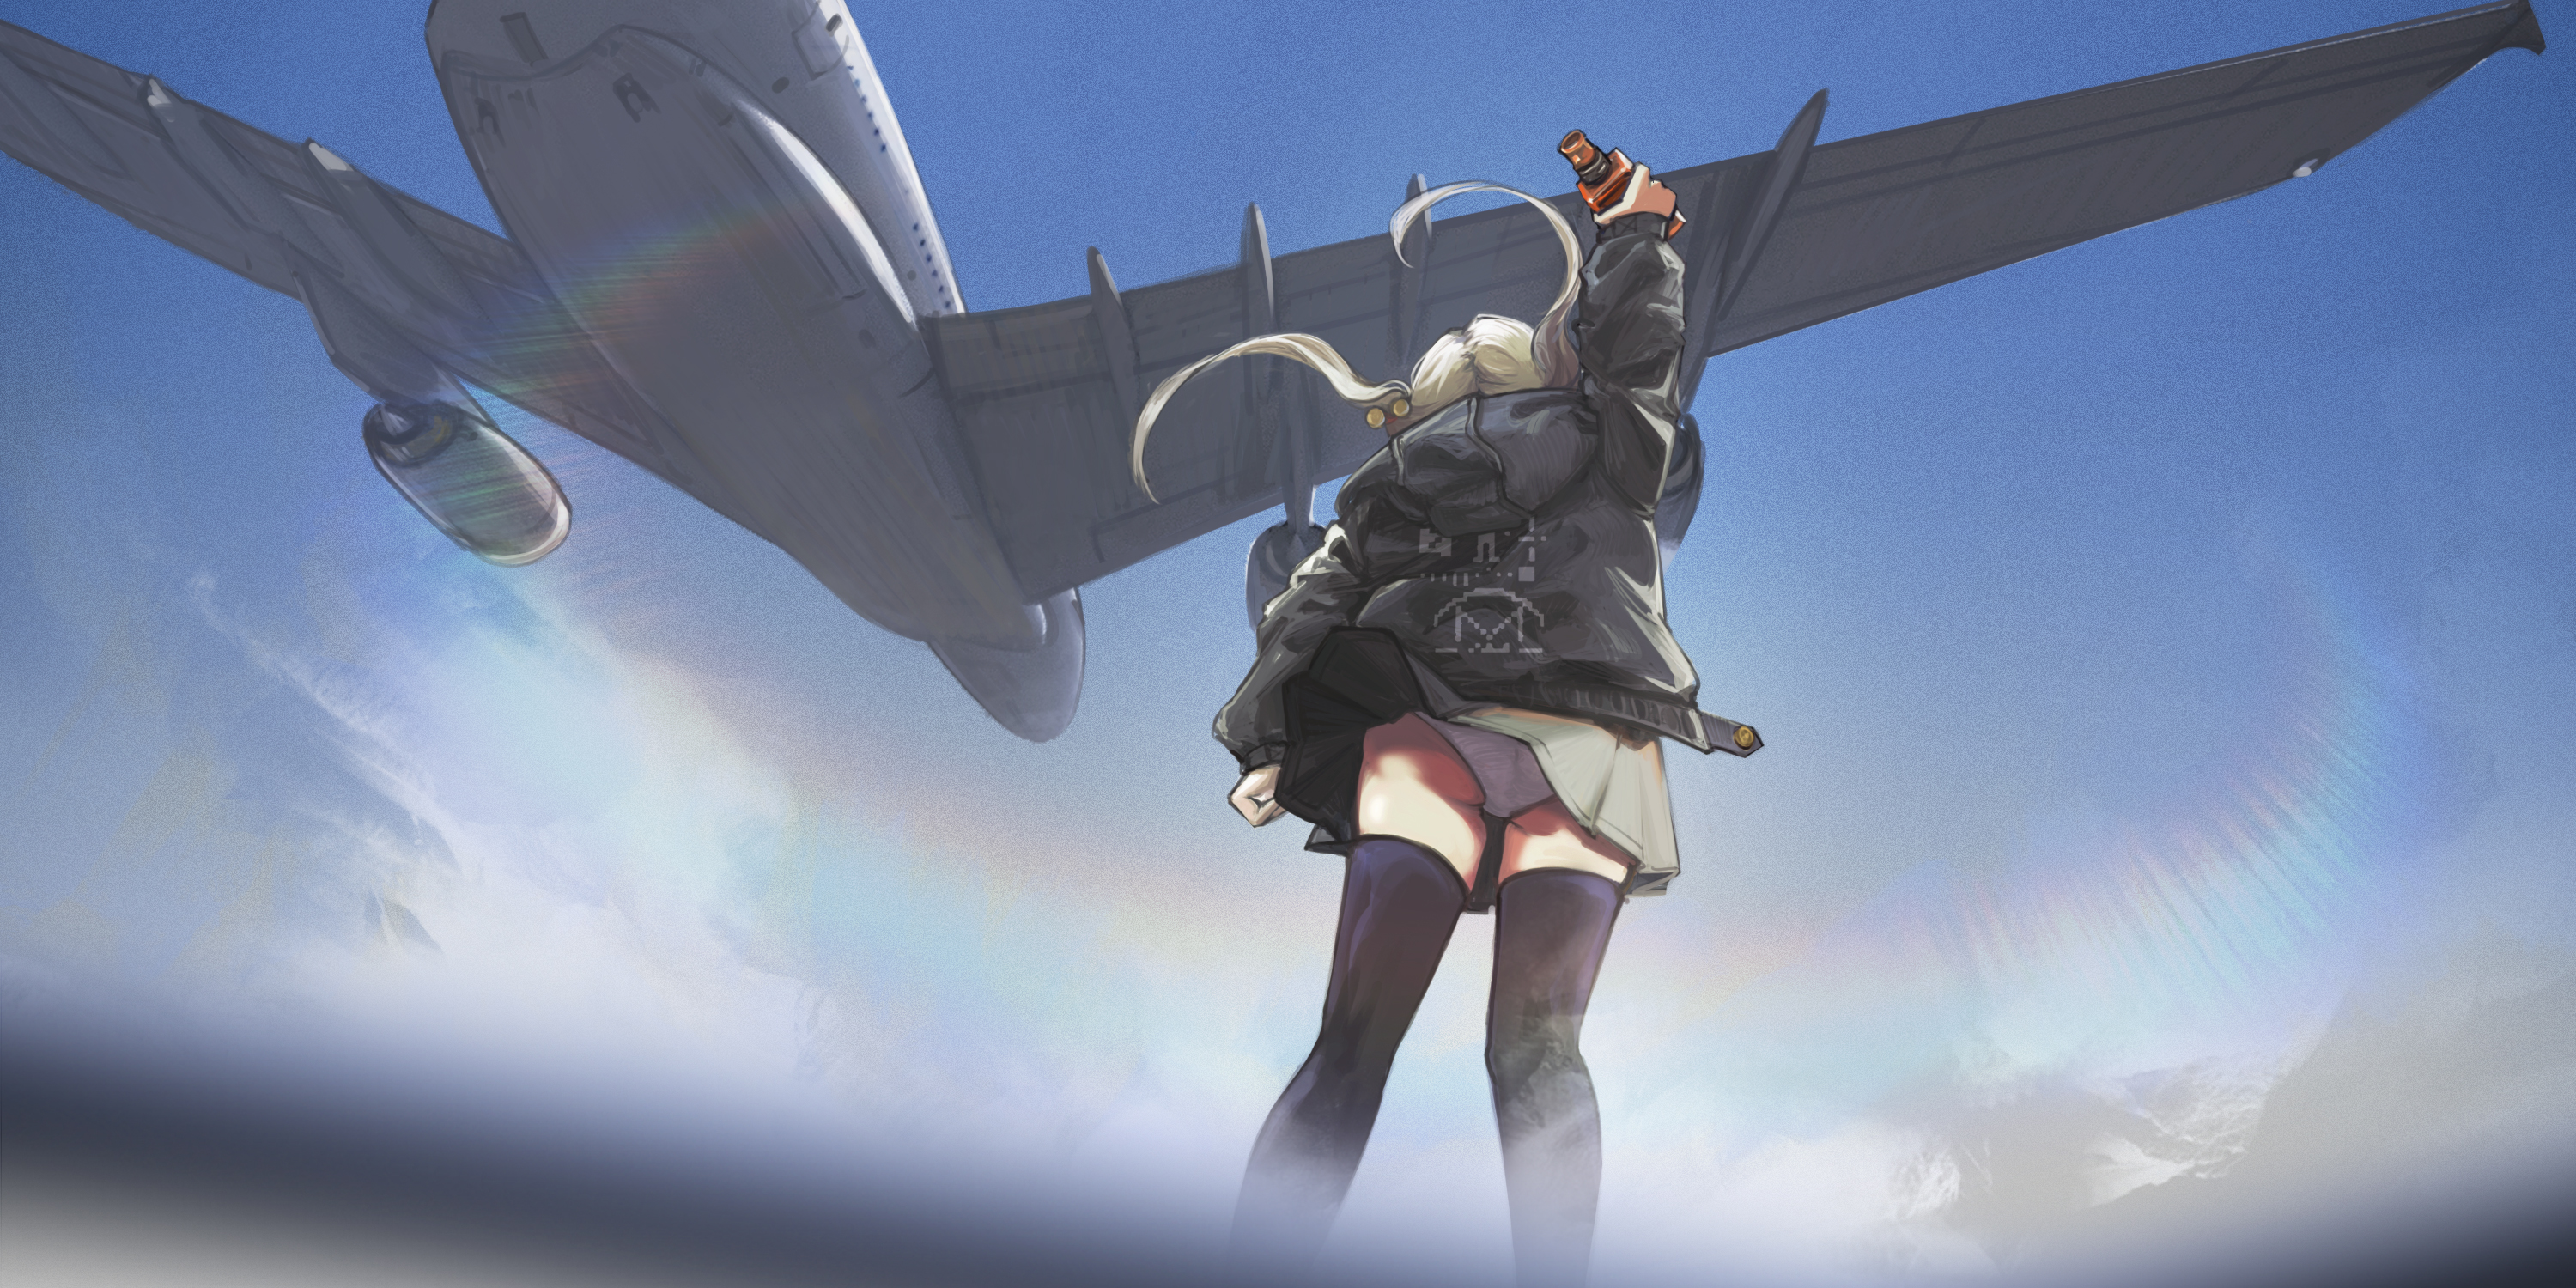 Anime 3000x1500 AegisFate anime anime girls panties Airbus skirt thigh-highs upskirt vehicle bottles stockings black stockings aircraft Pixiv pantsu shot